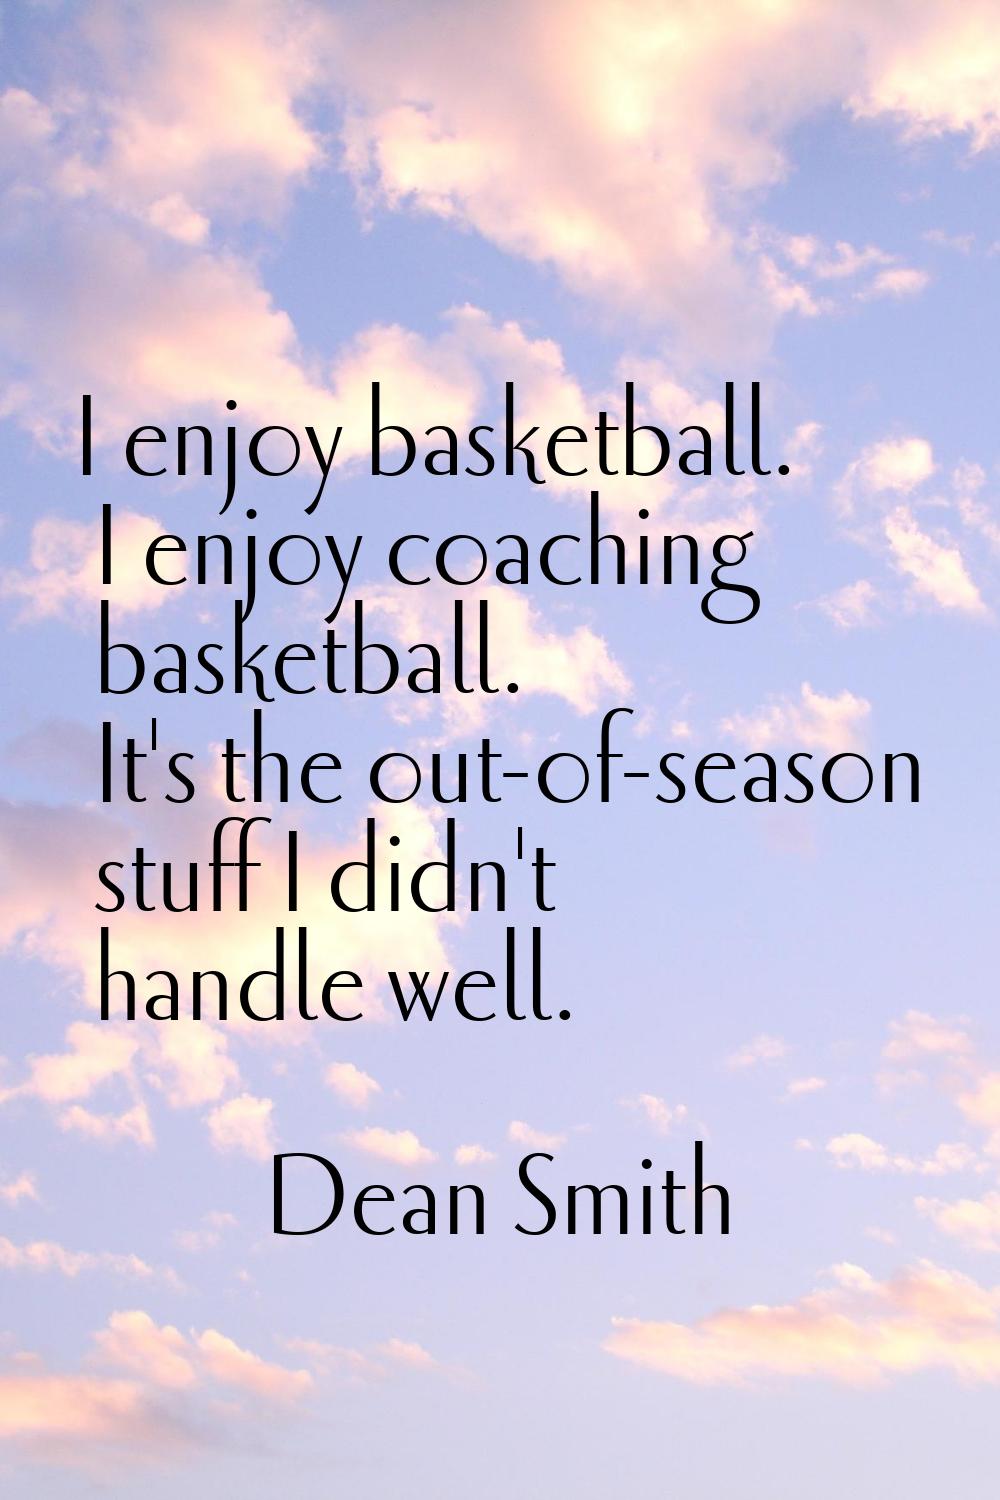 I enjoy basketball. I enjoy coaching basketball. It's the out-of-season stuff I didn't handle well.